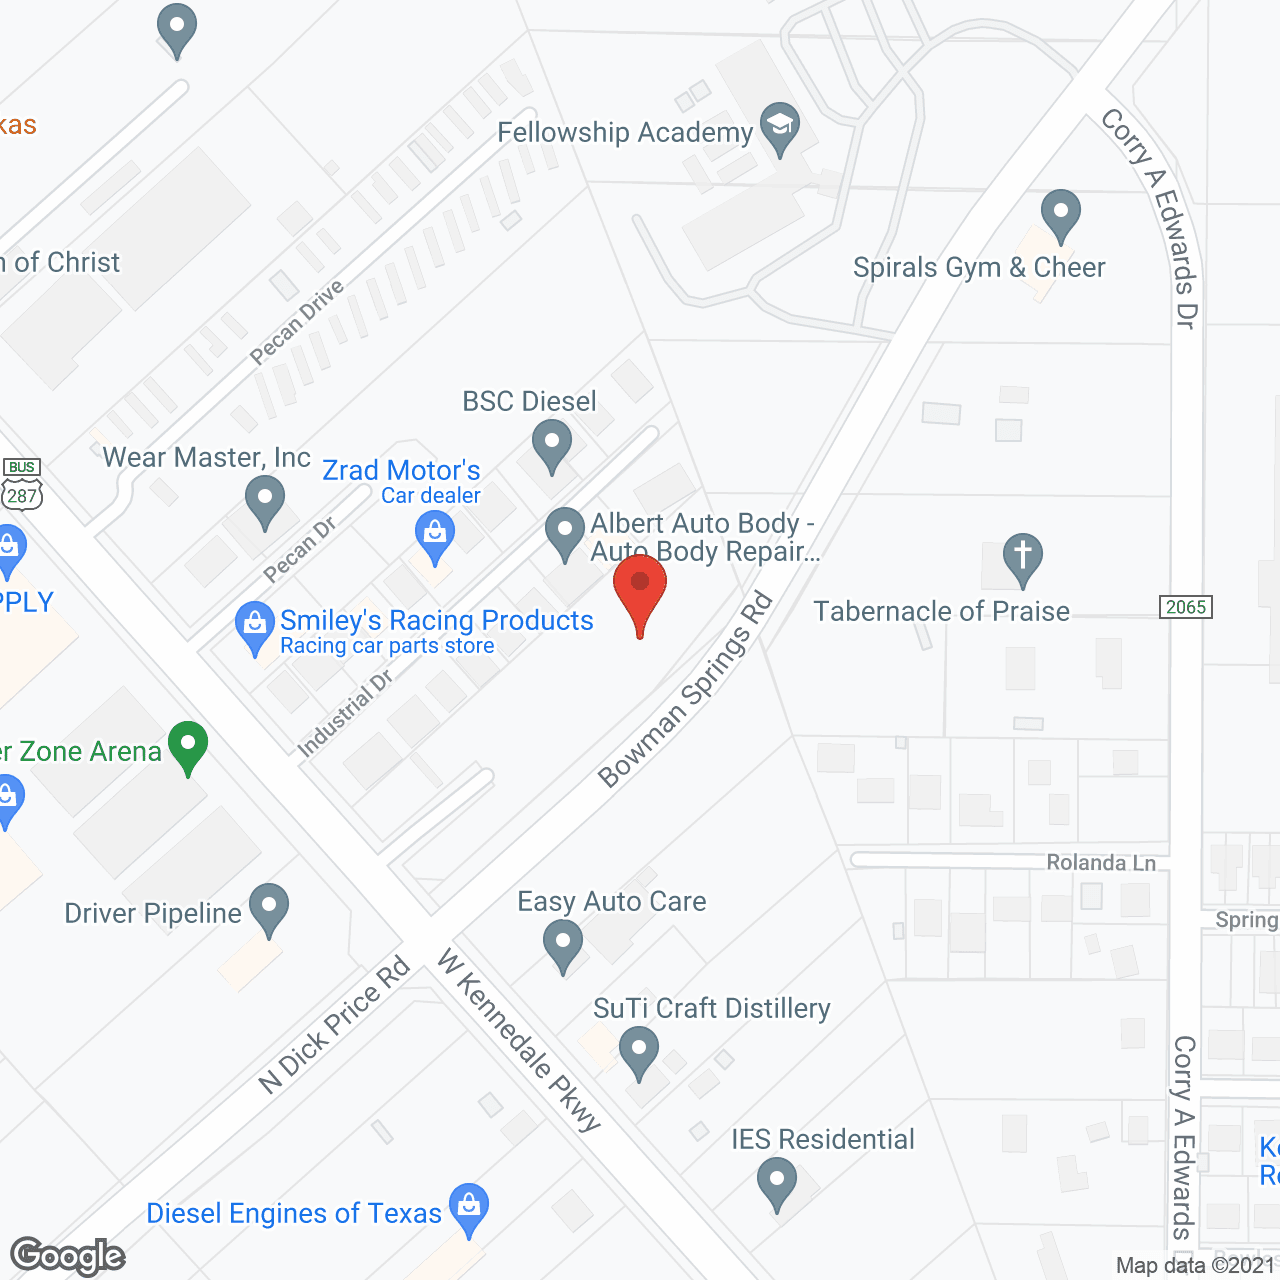 Serenity Inn in google map